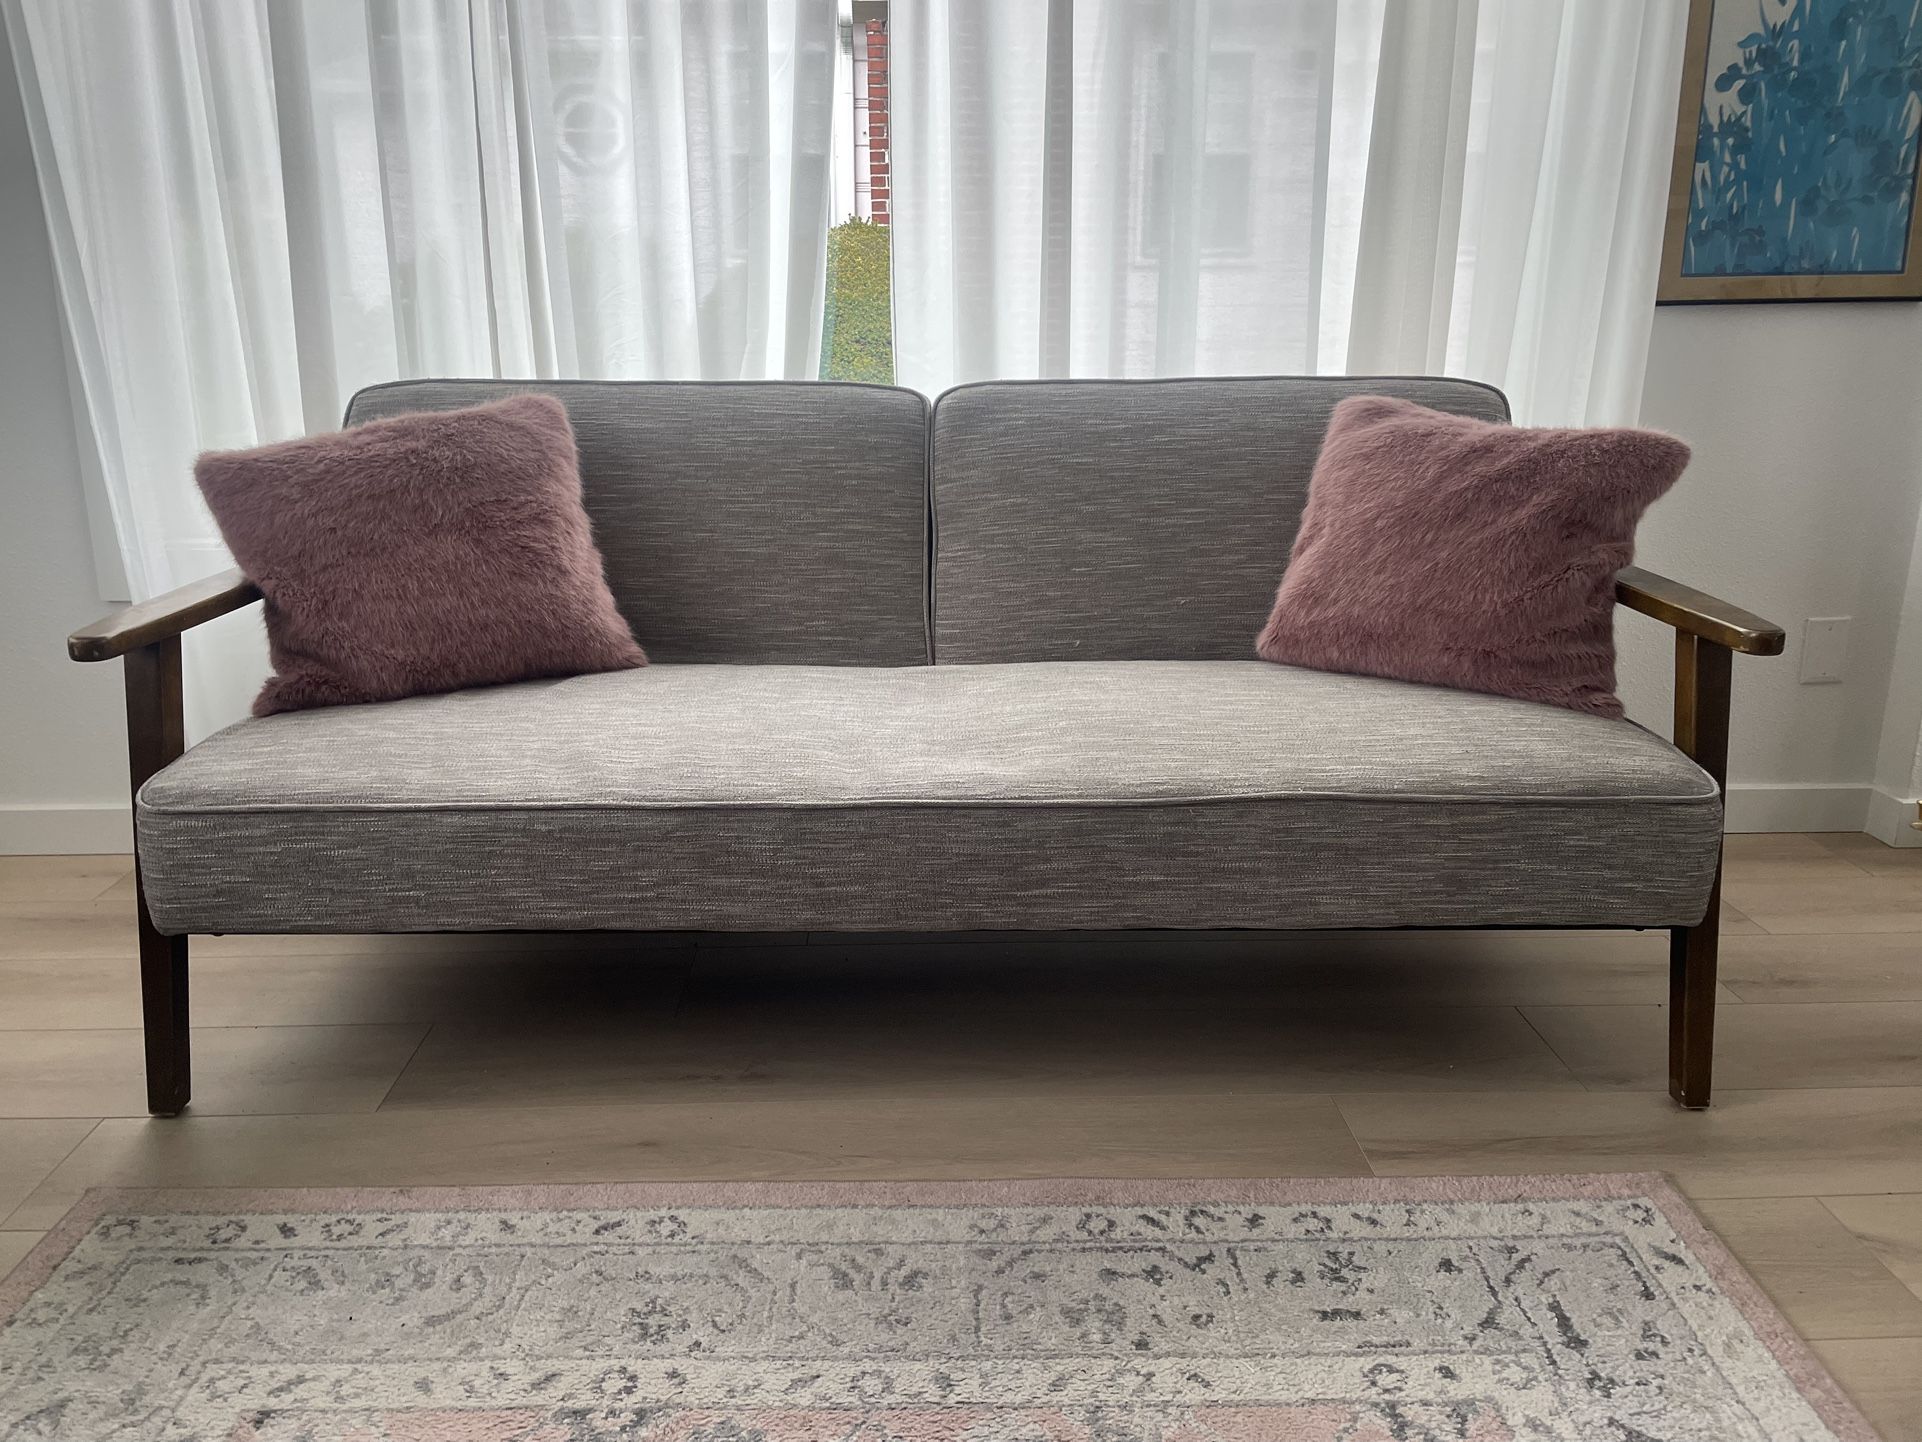 Mid century style futon couch